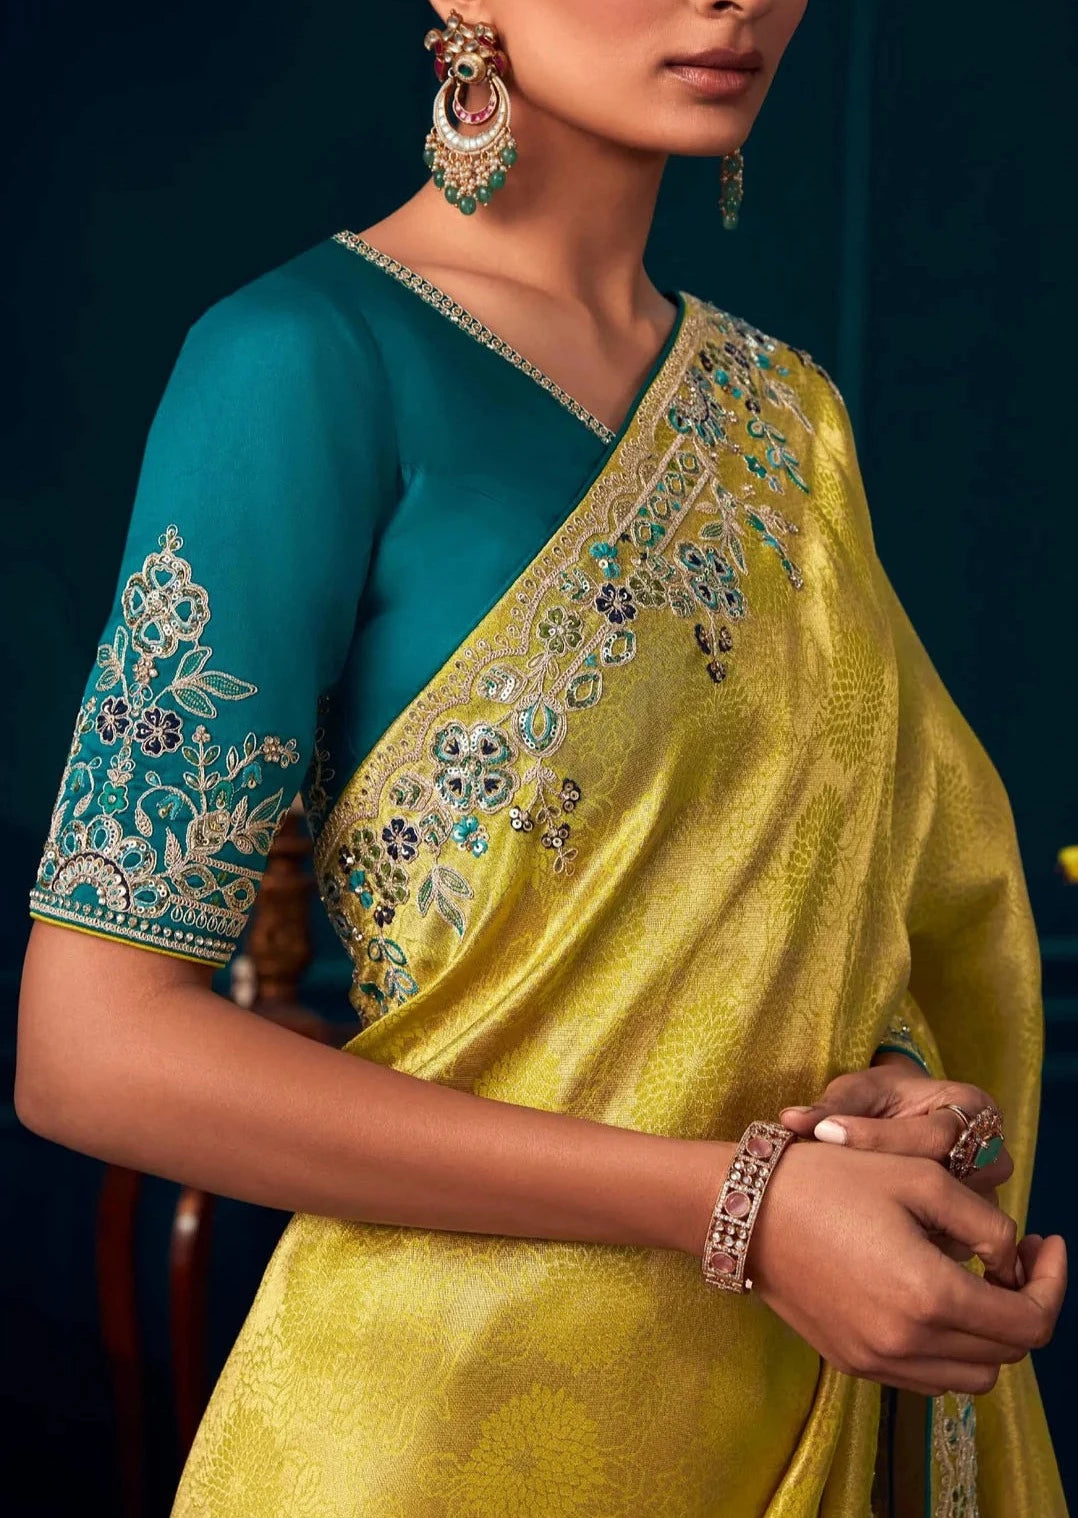 Banarasi silk yellow and blue bridal handwork embroidery saree online for bride haldi ceremony.